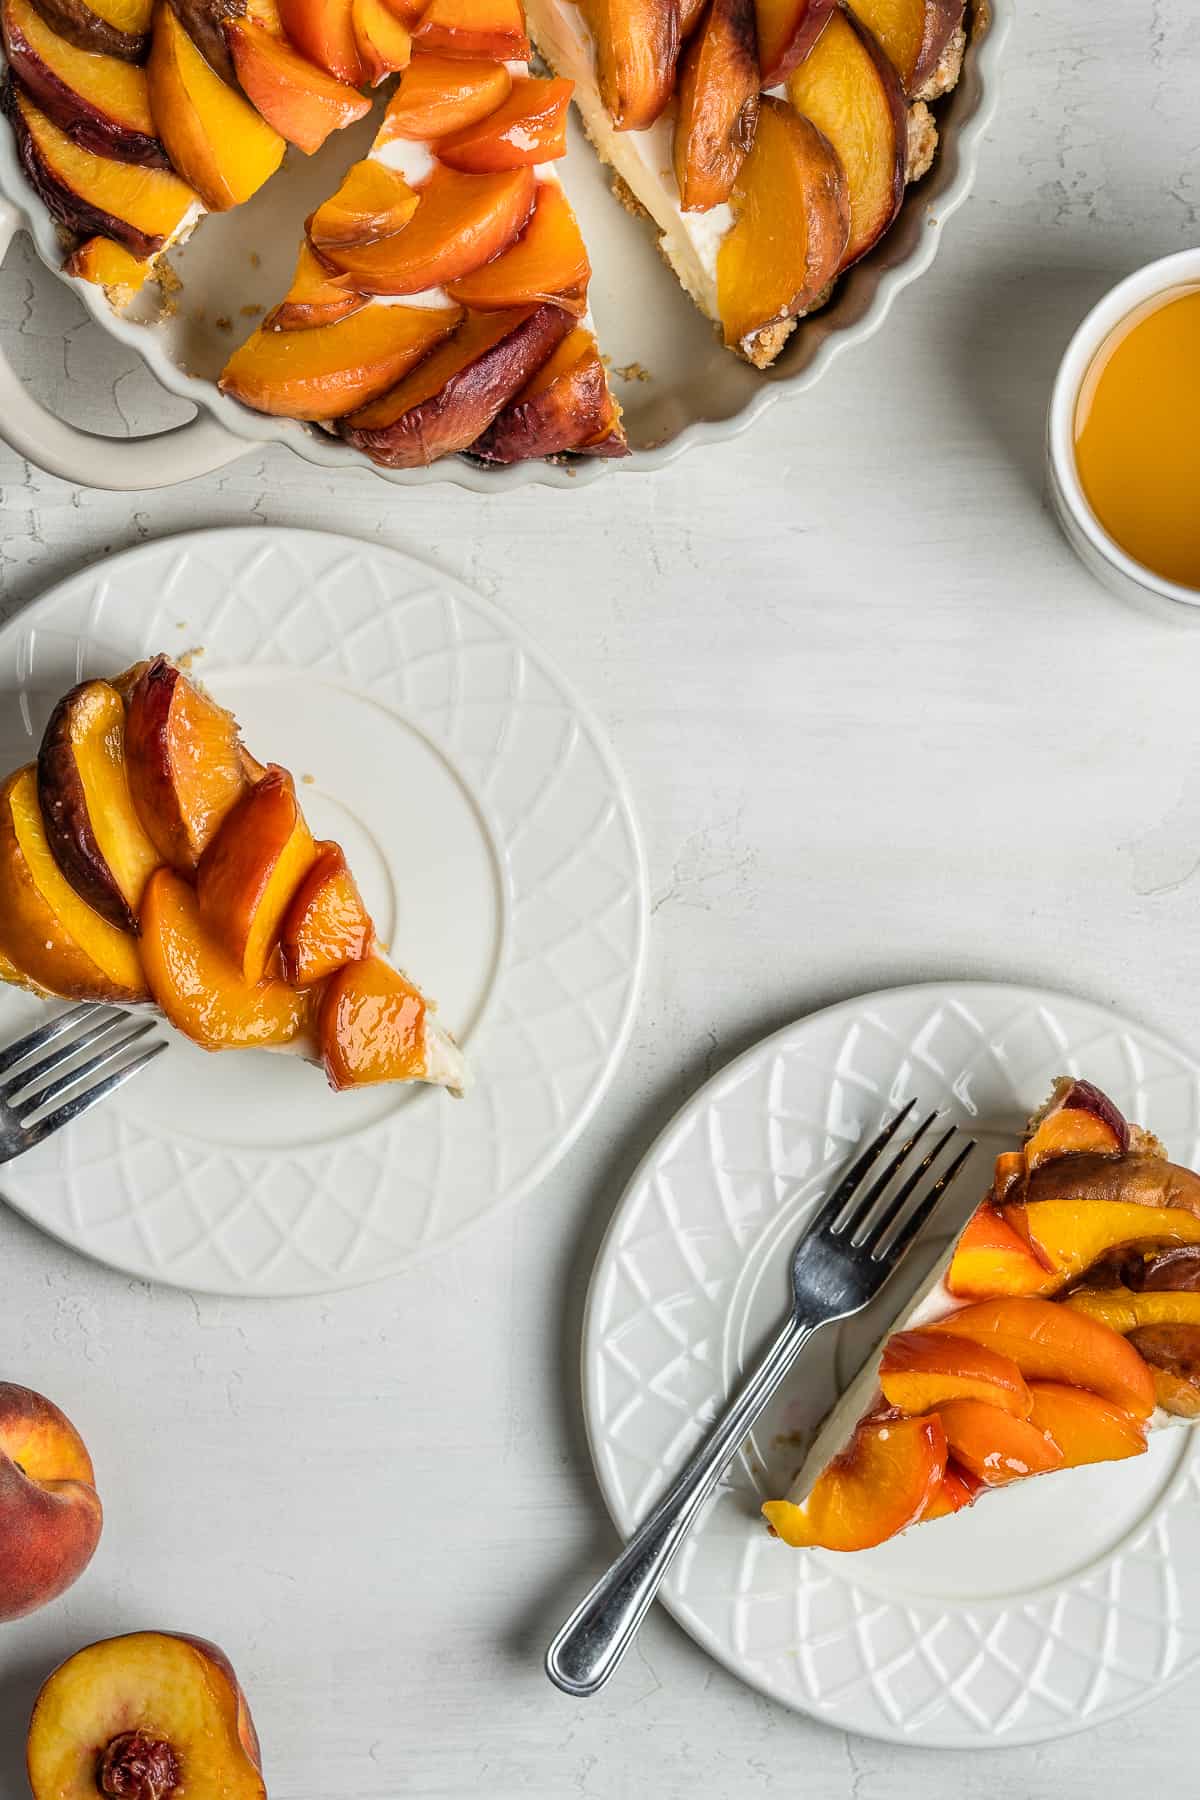 French peach tart slices on dessert plates.